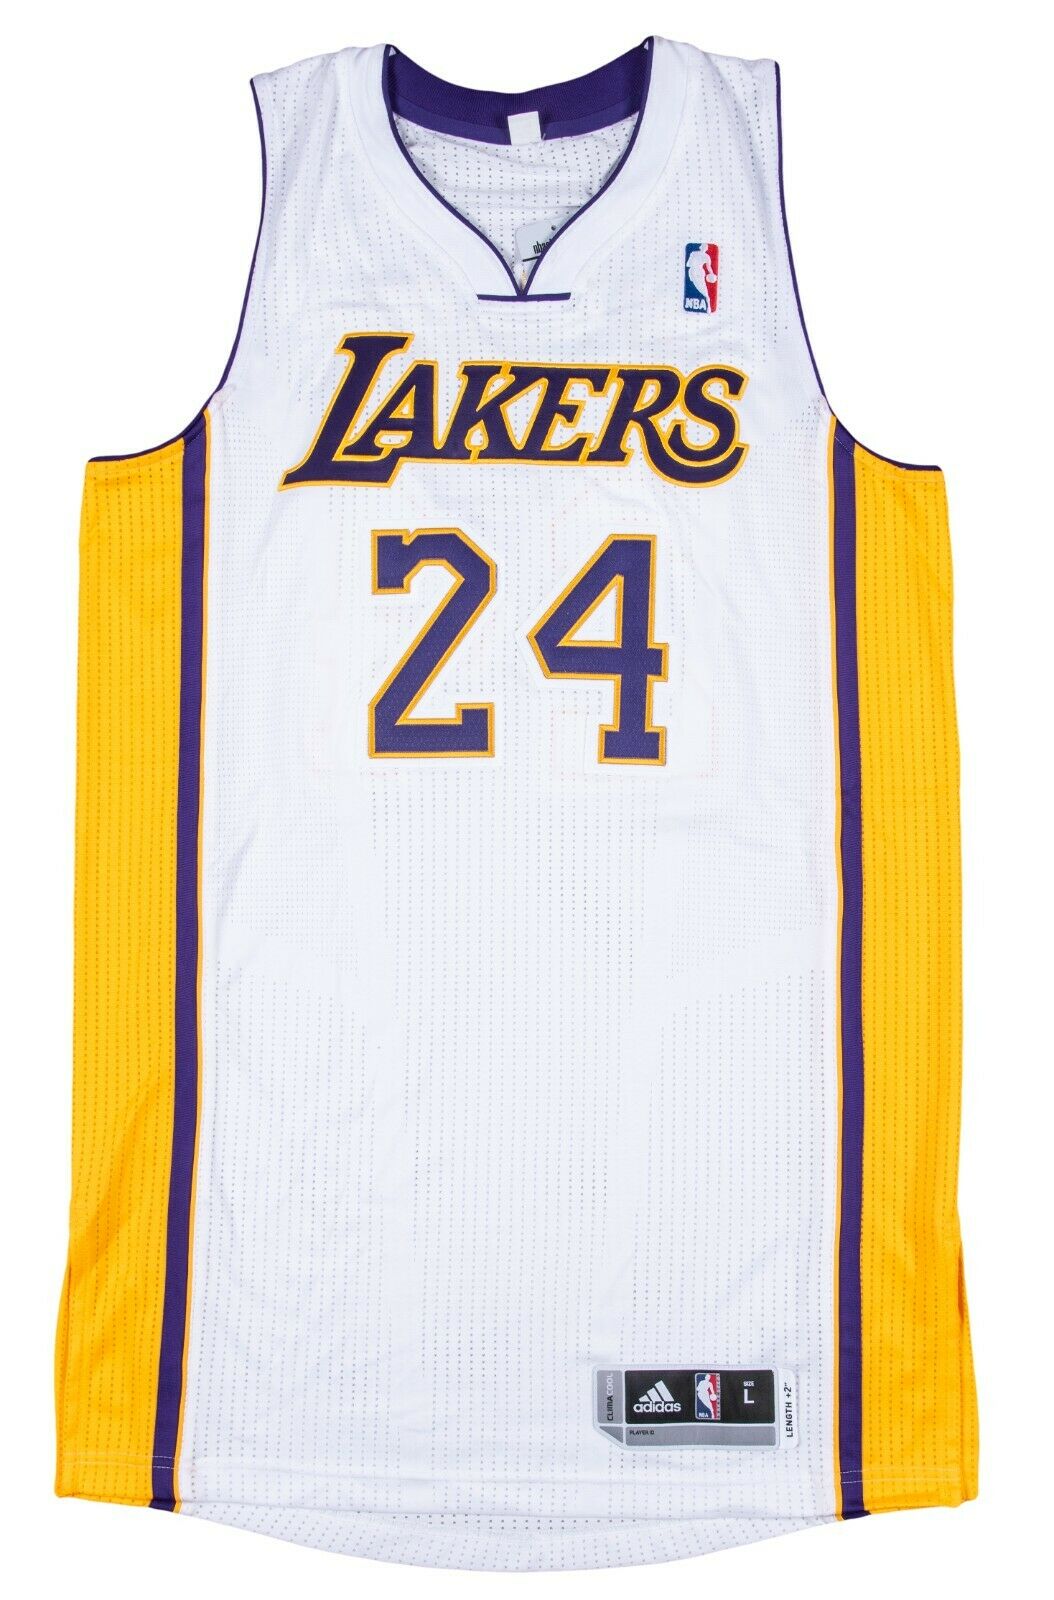 Kobe Bryant Black Mamba Signed #24 Authentic Los Angeles Lakers